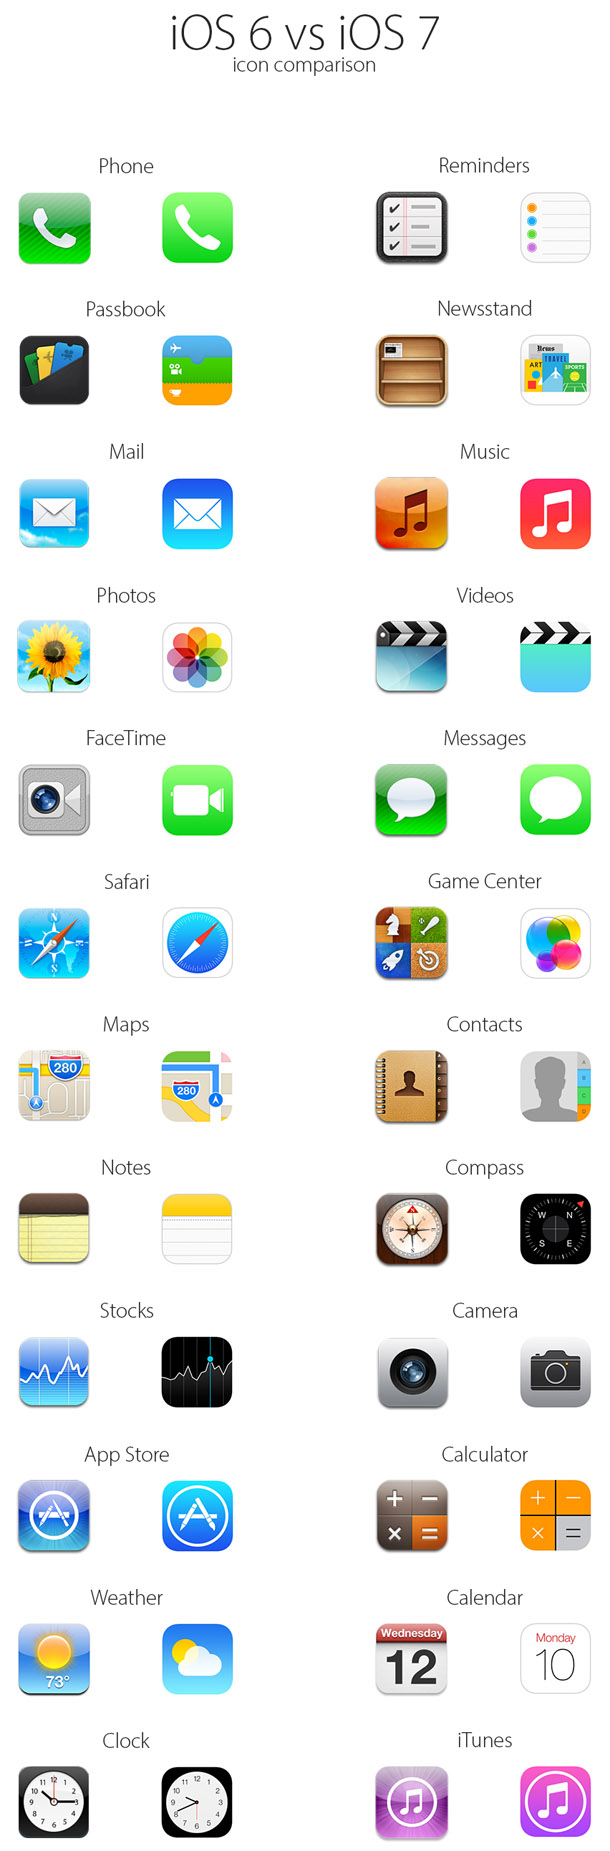 iOS6vsiOS7_icons